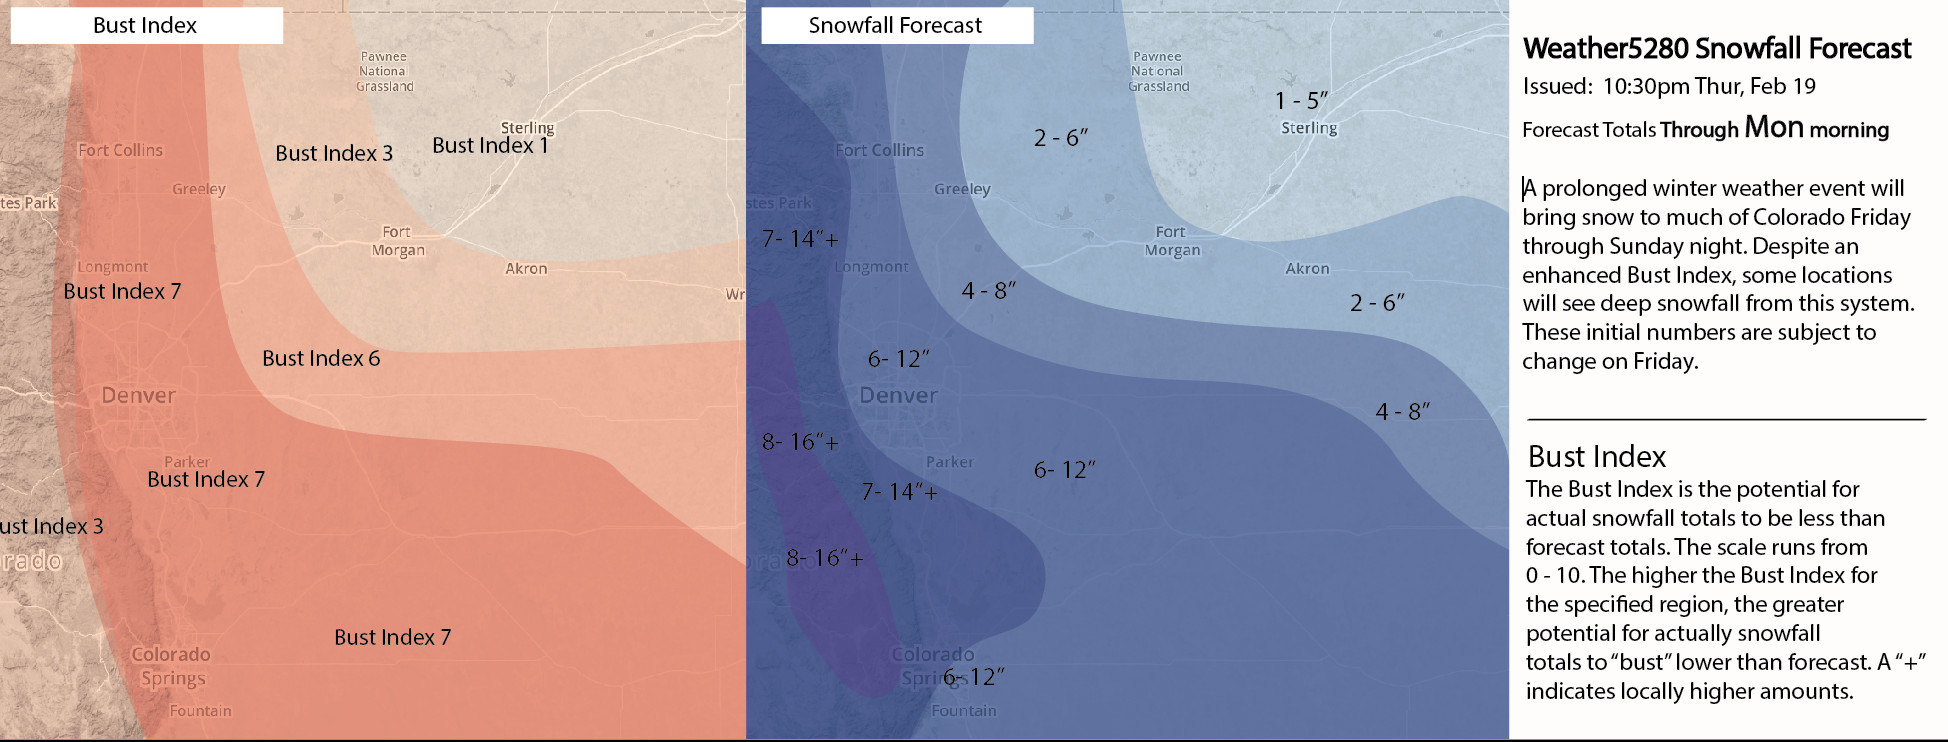 Weather5280 Snowfall Forecast